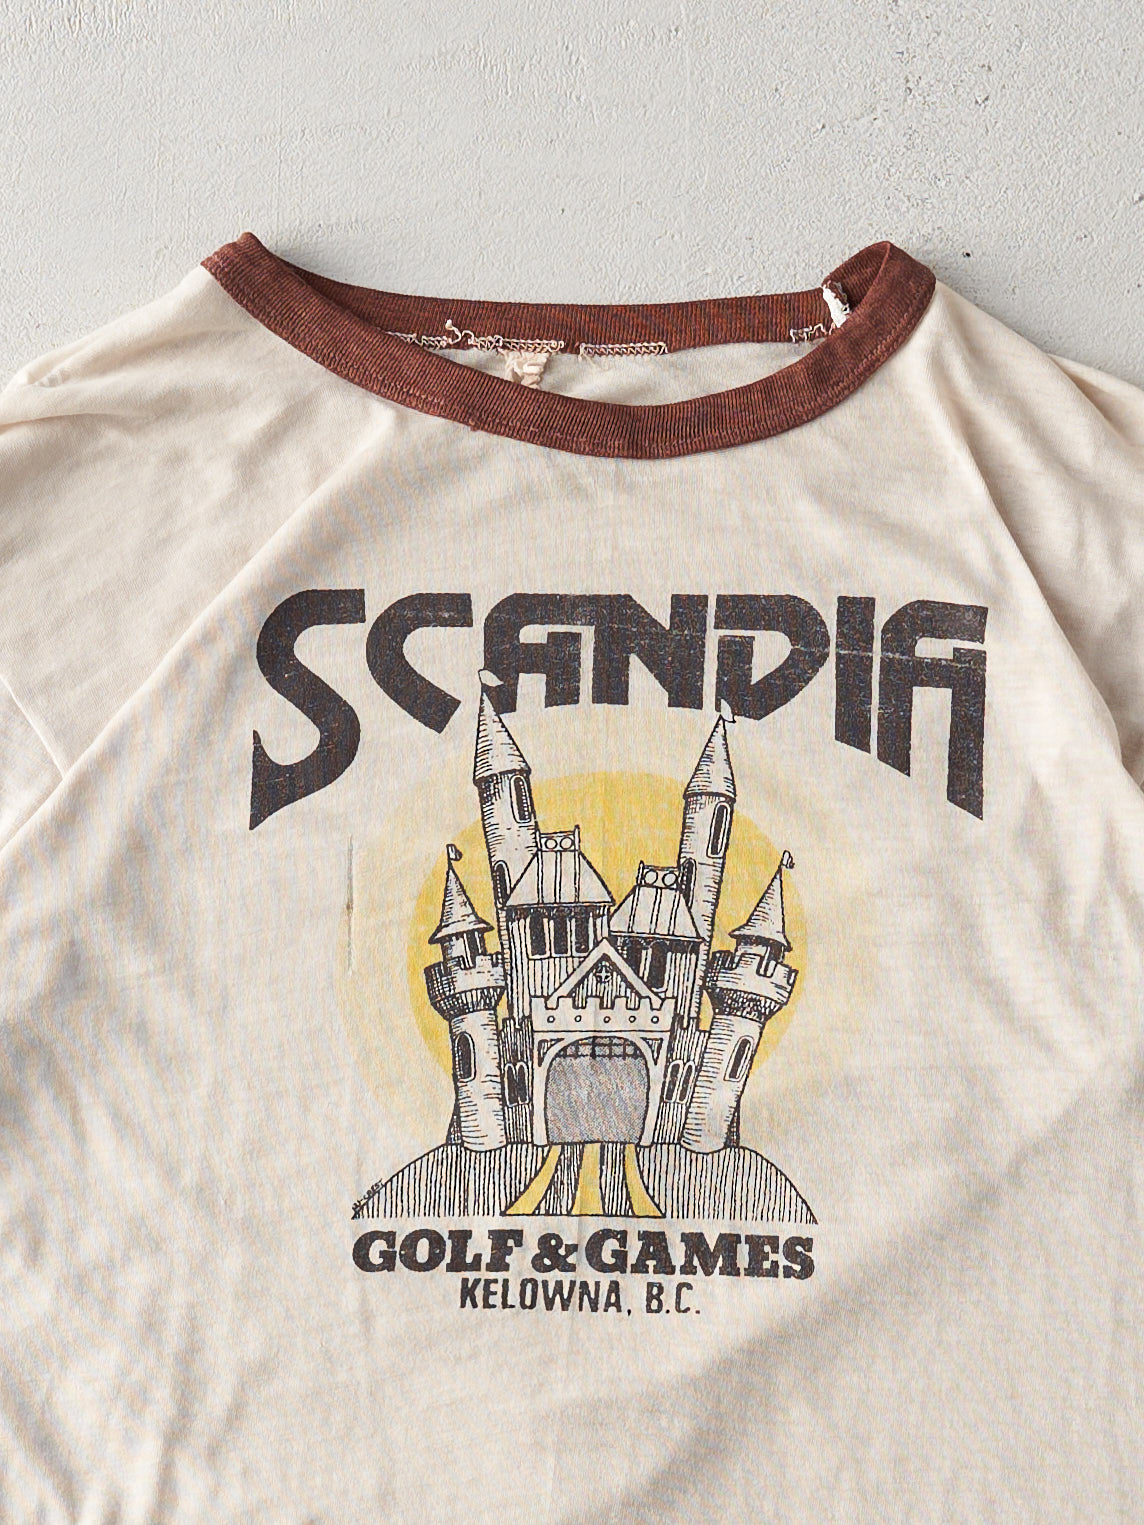 Vintage 70s Beige "Scandia Golf & Games" Ringer Tee (S)